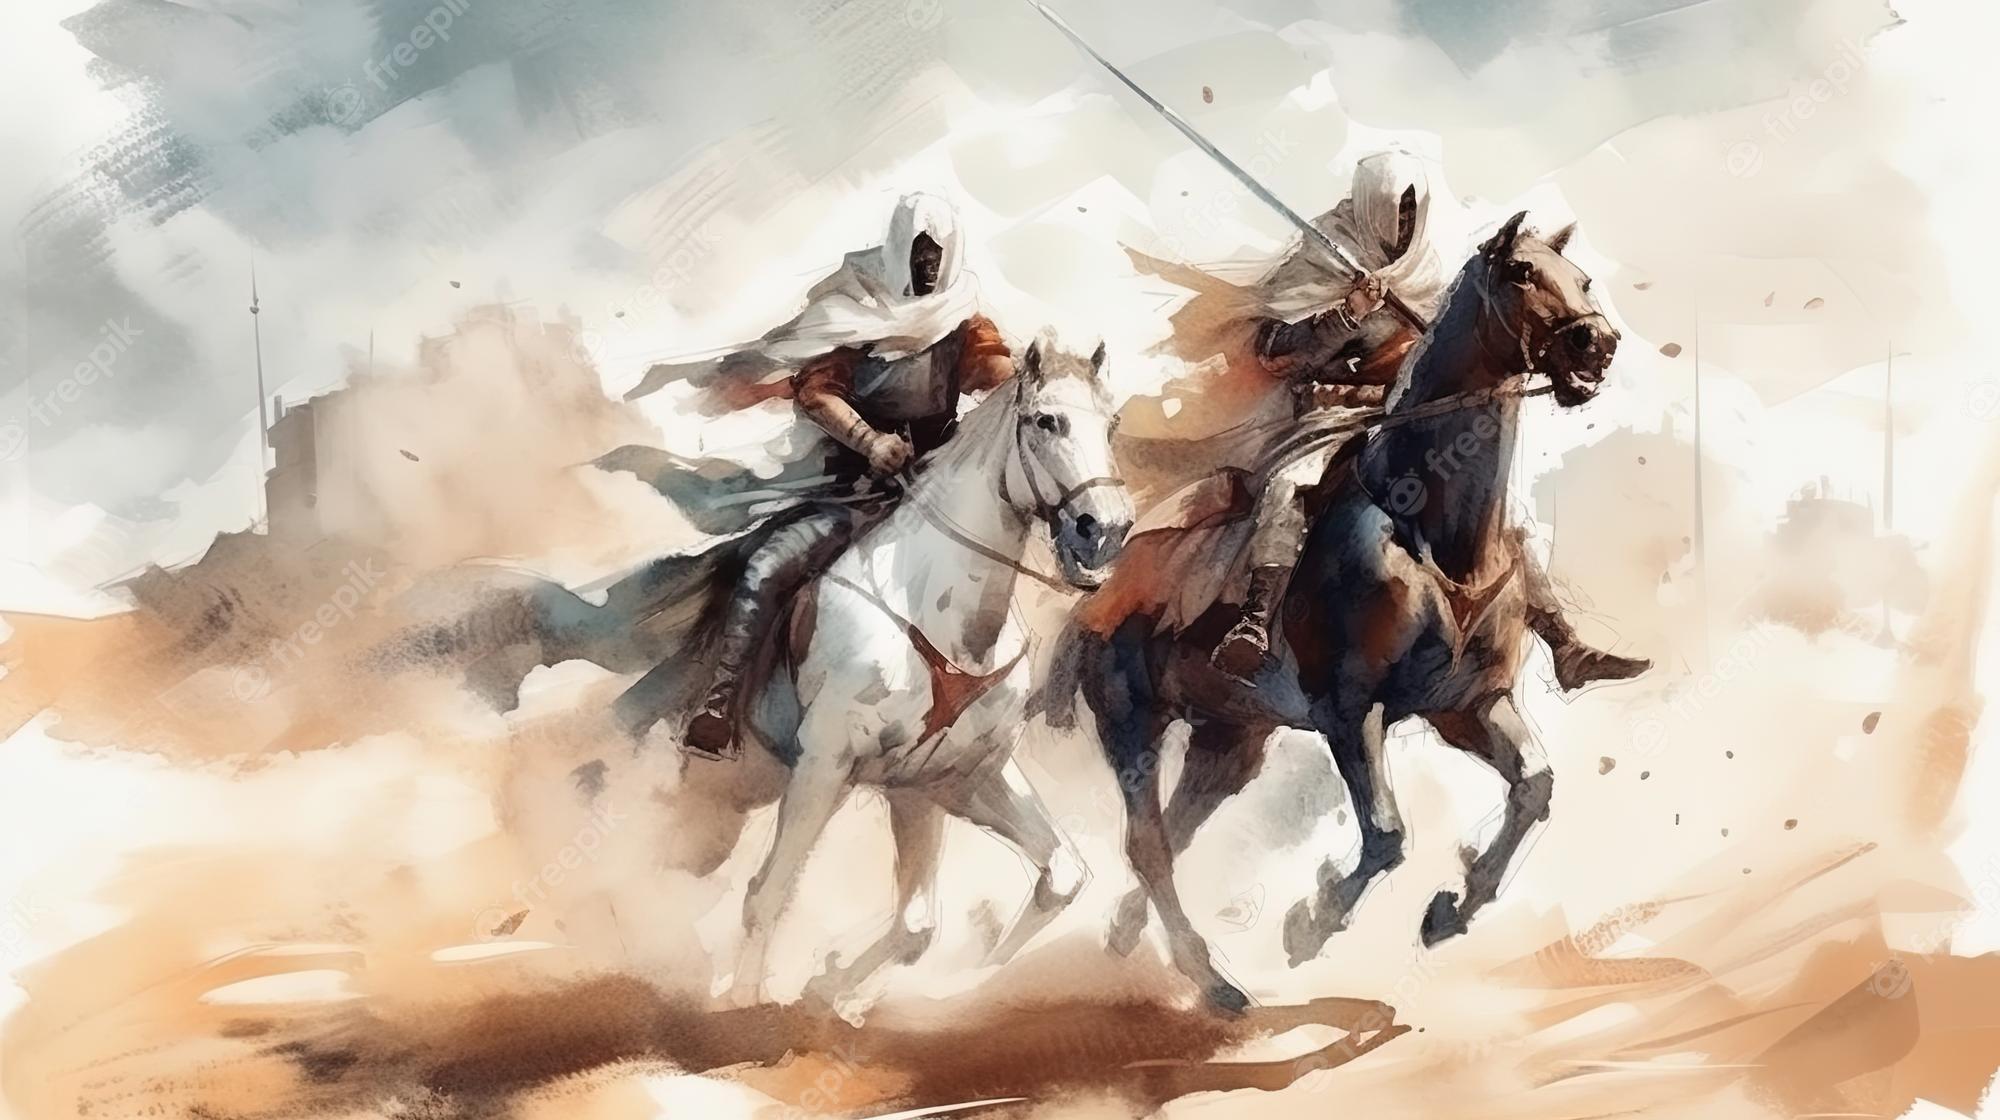 Premium Photo Watercolor Of Medieval Arabian Knight And Crusader